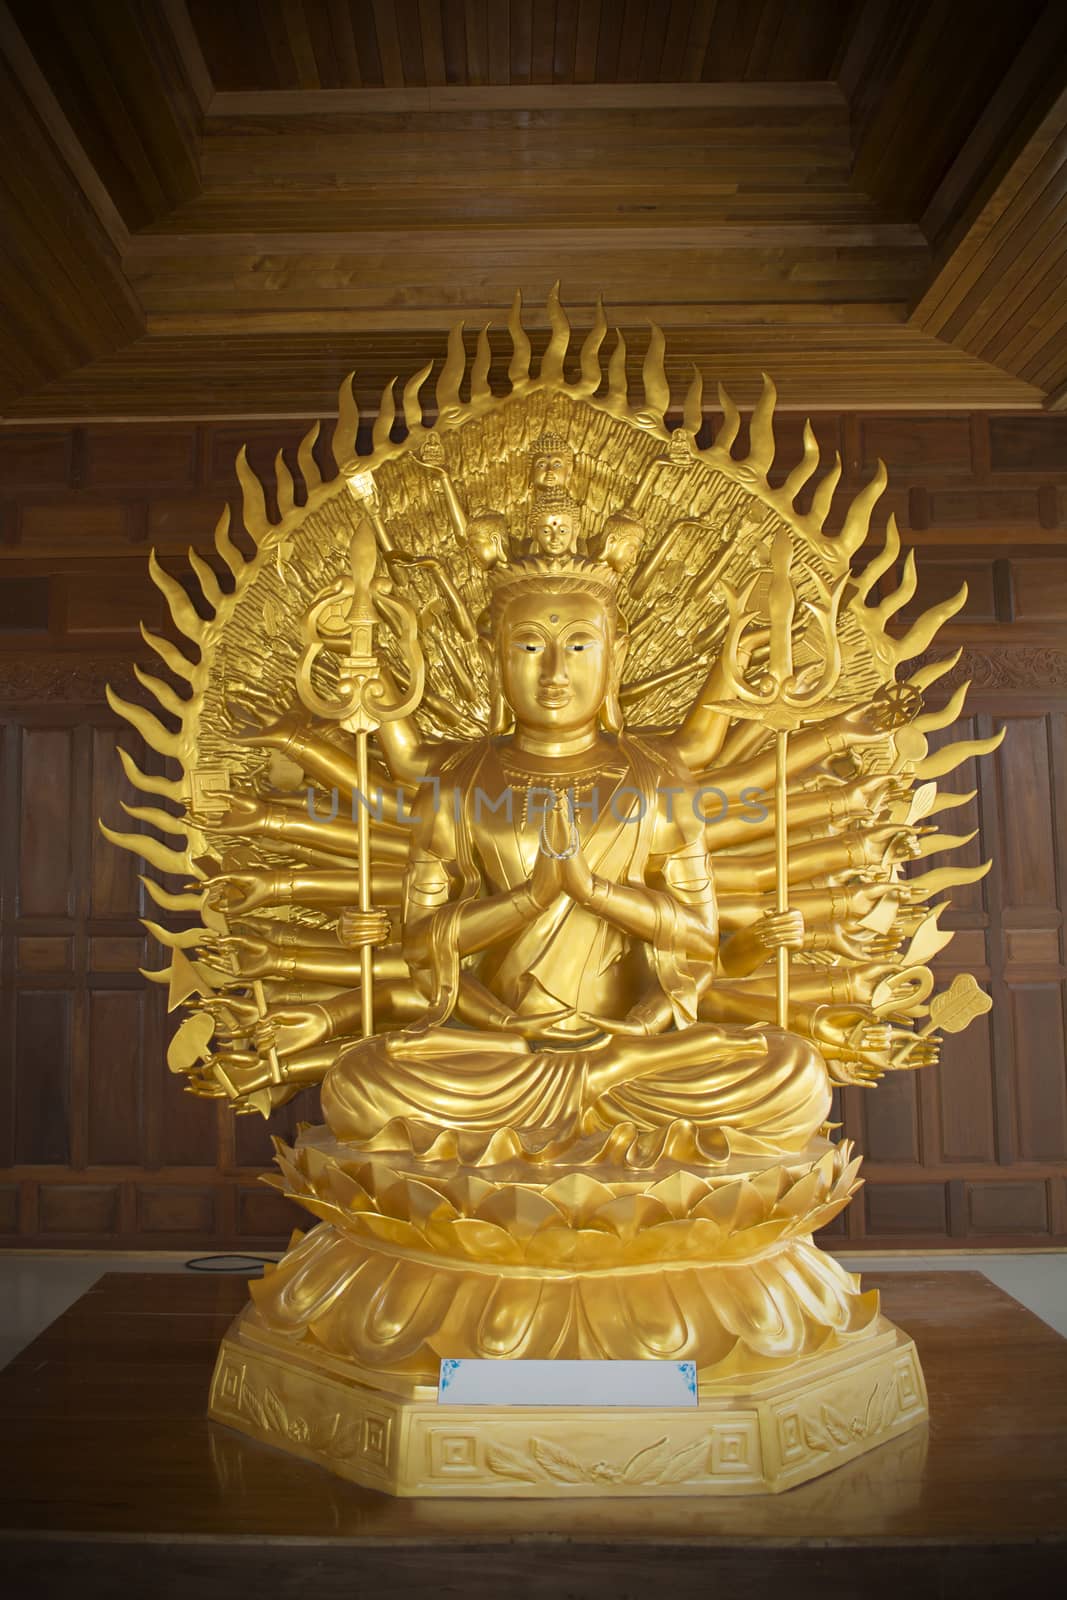 Golden Kuan Yin Thousand Hands statue in temple. by pandpstock_002